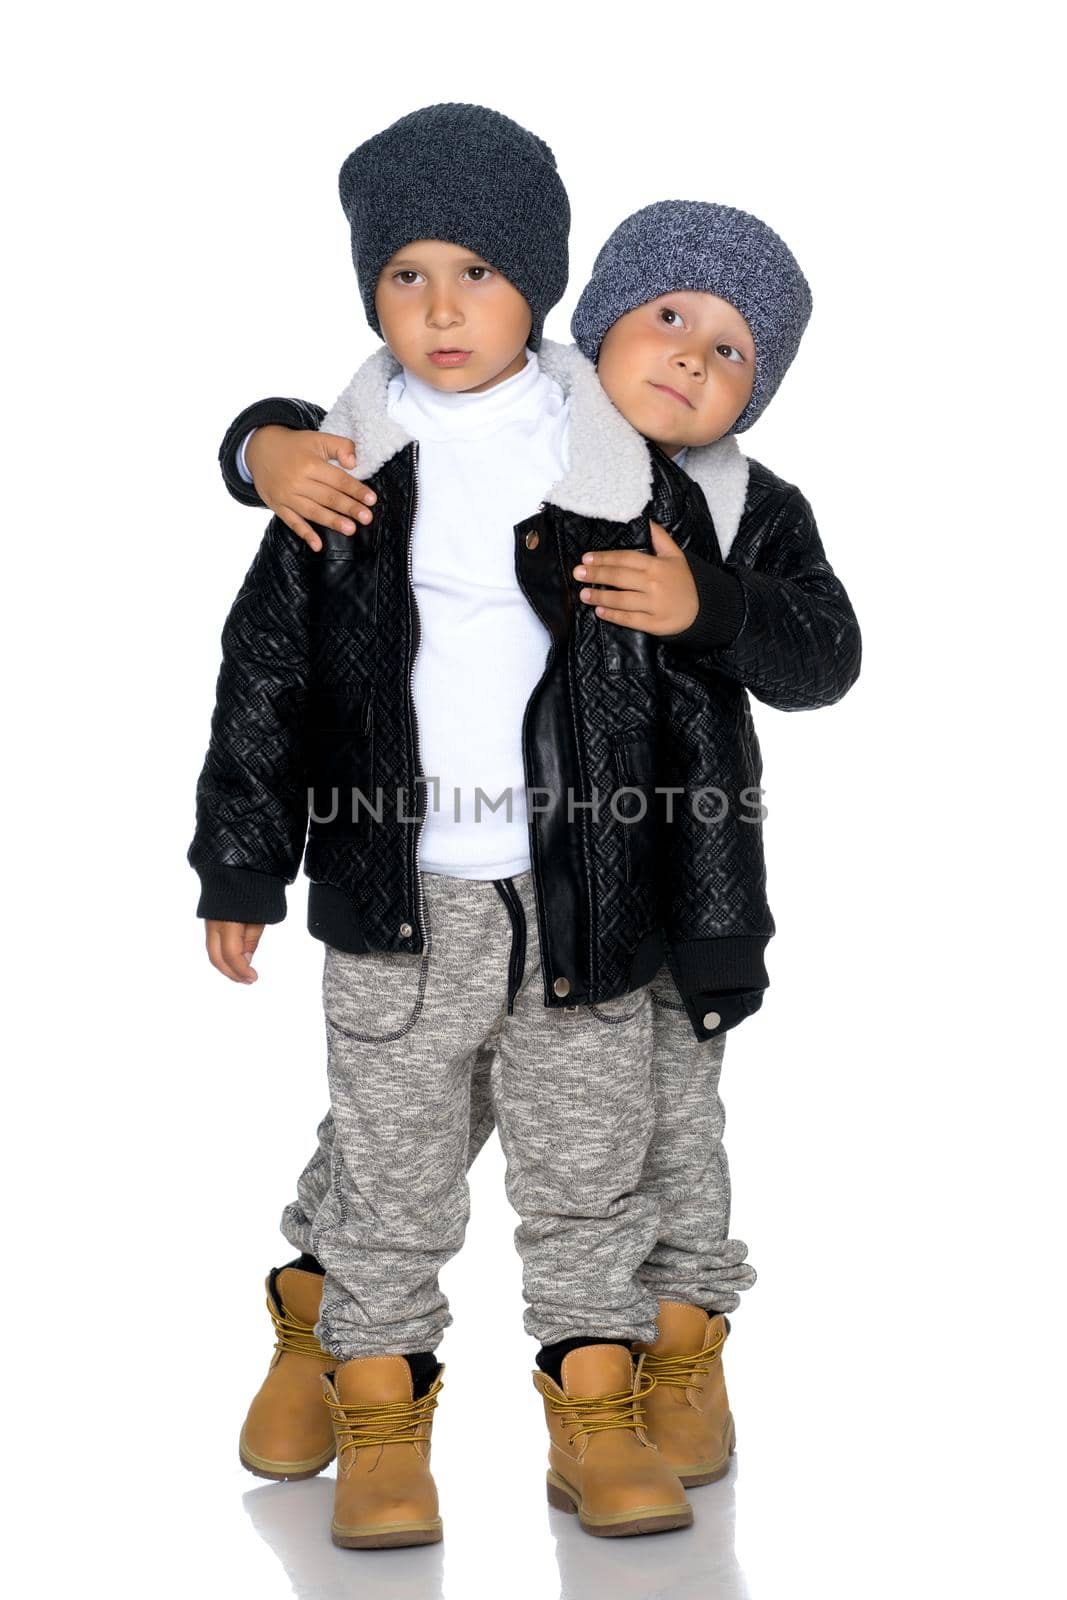 Two little boys in black jackets and hats. by kolesnikov_studio